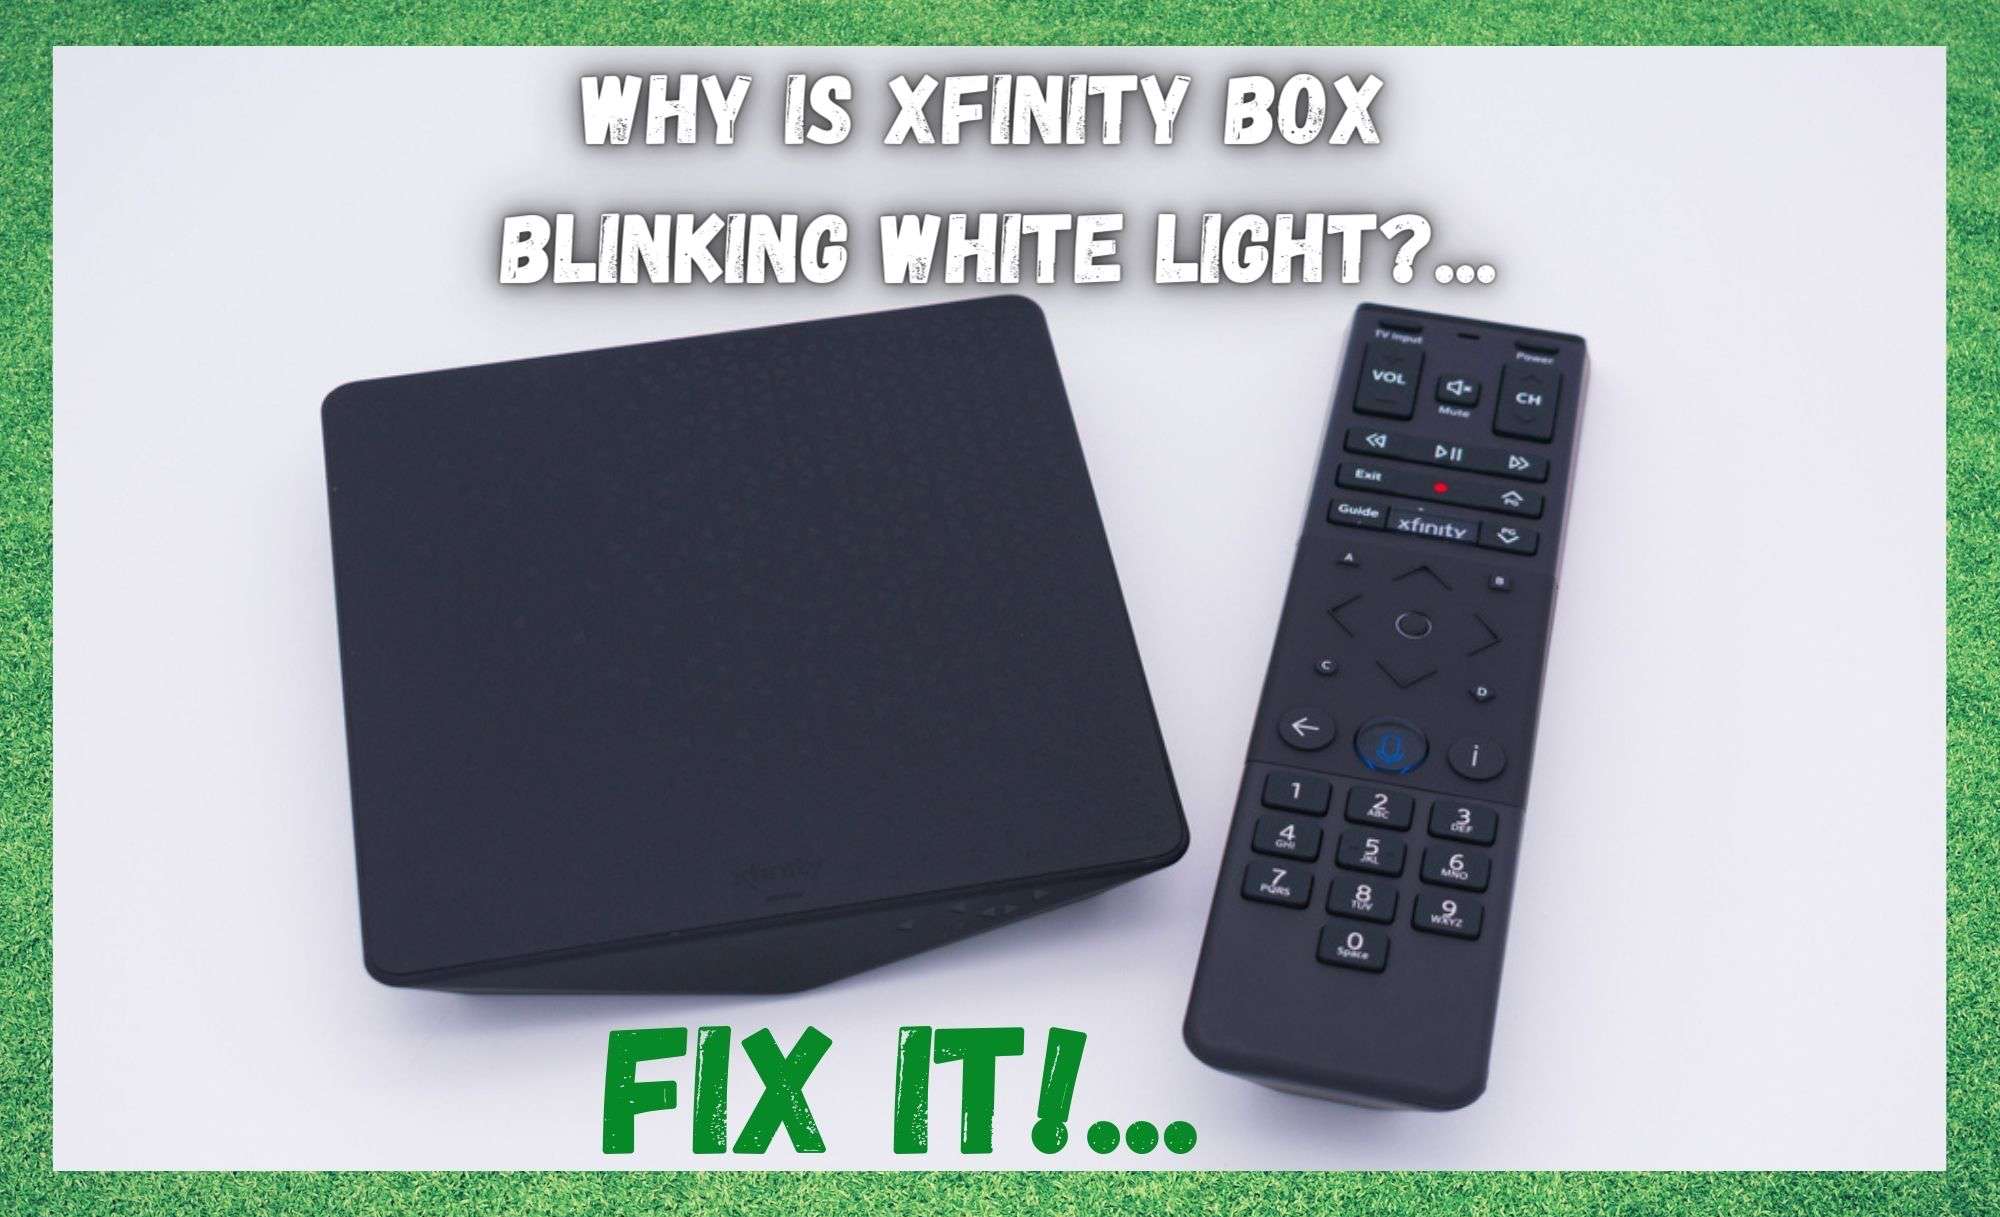 Xfinity Box가 흰색 표시등을 깜박이는 이유는 무엇입니까? 4 수정